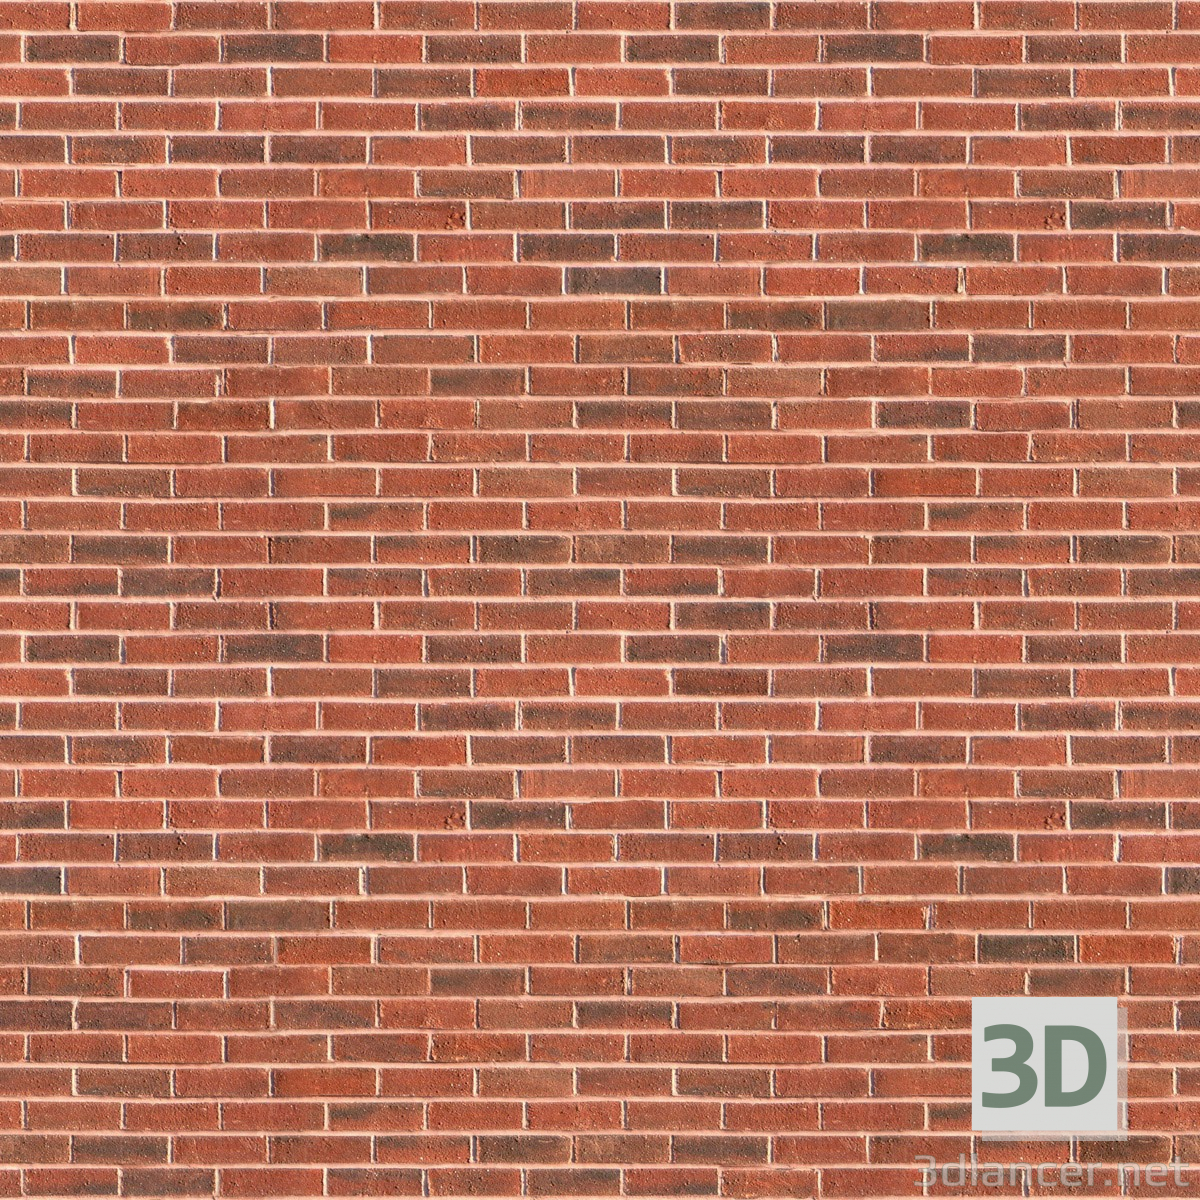 Texture brickwork 004 free download - image